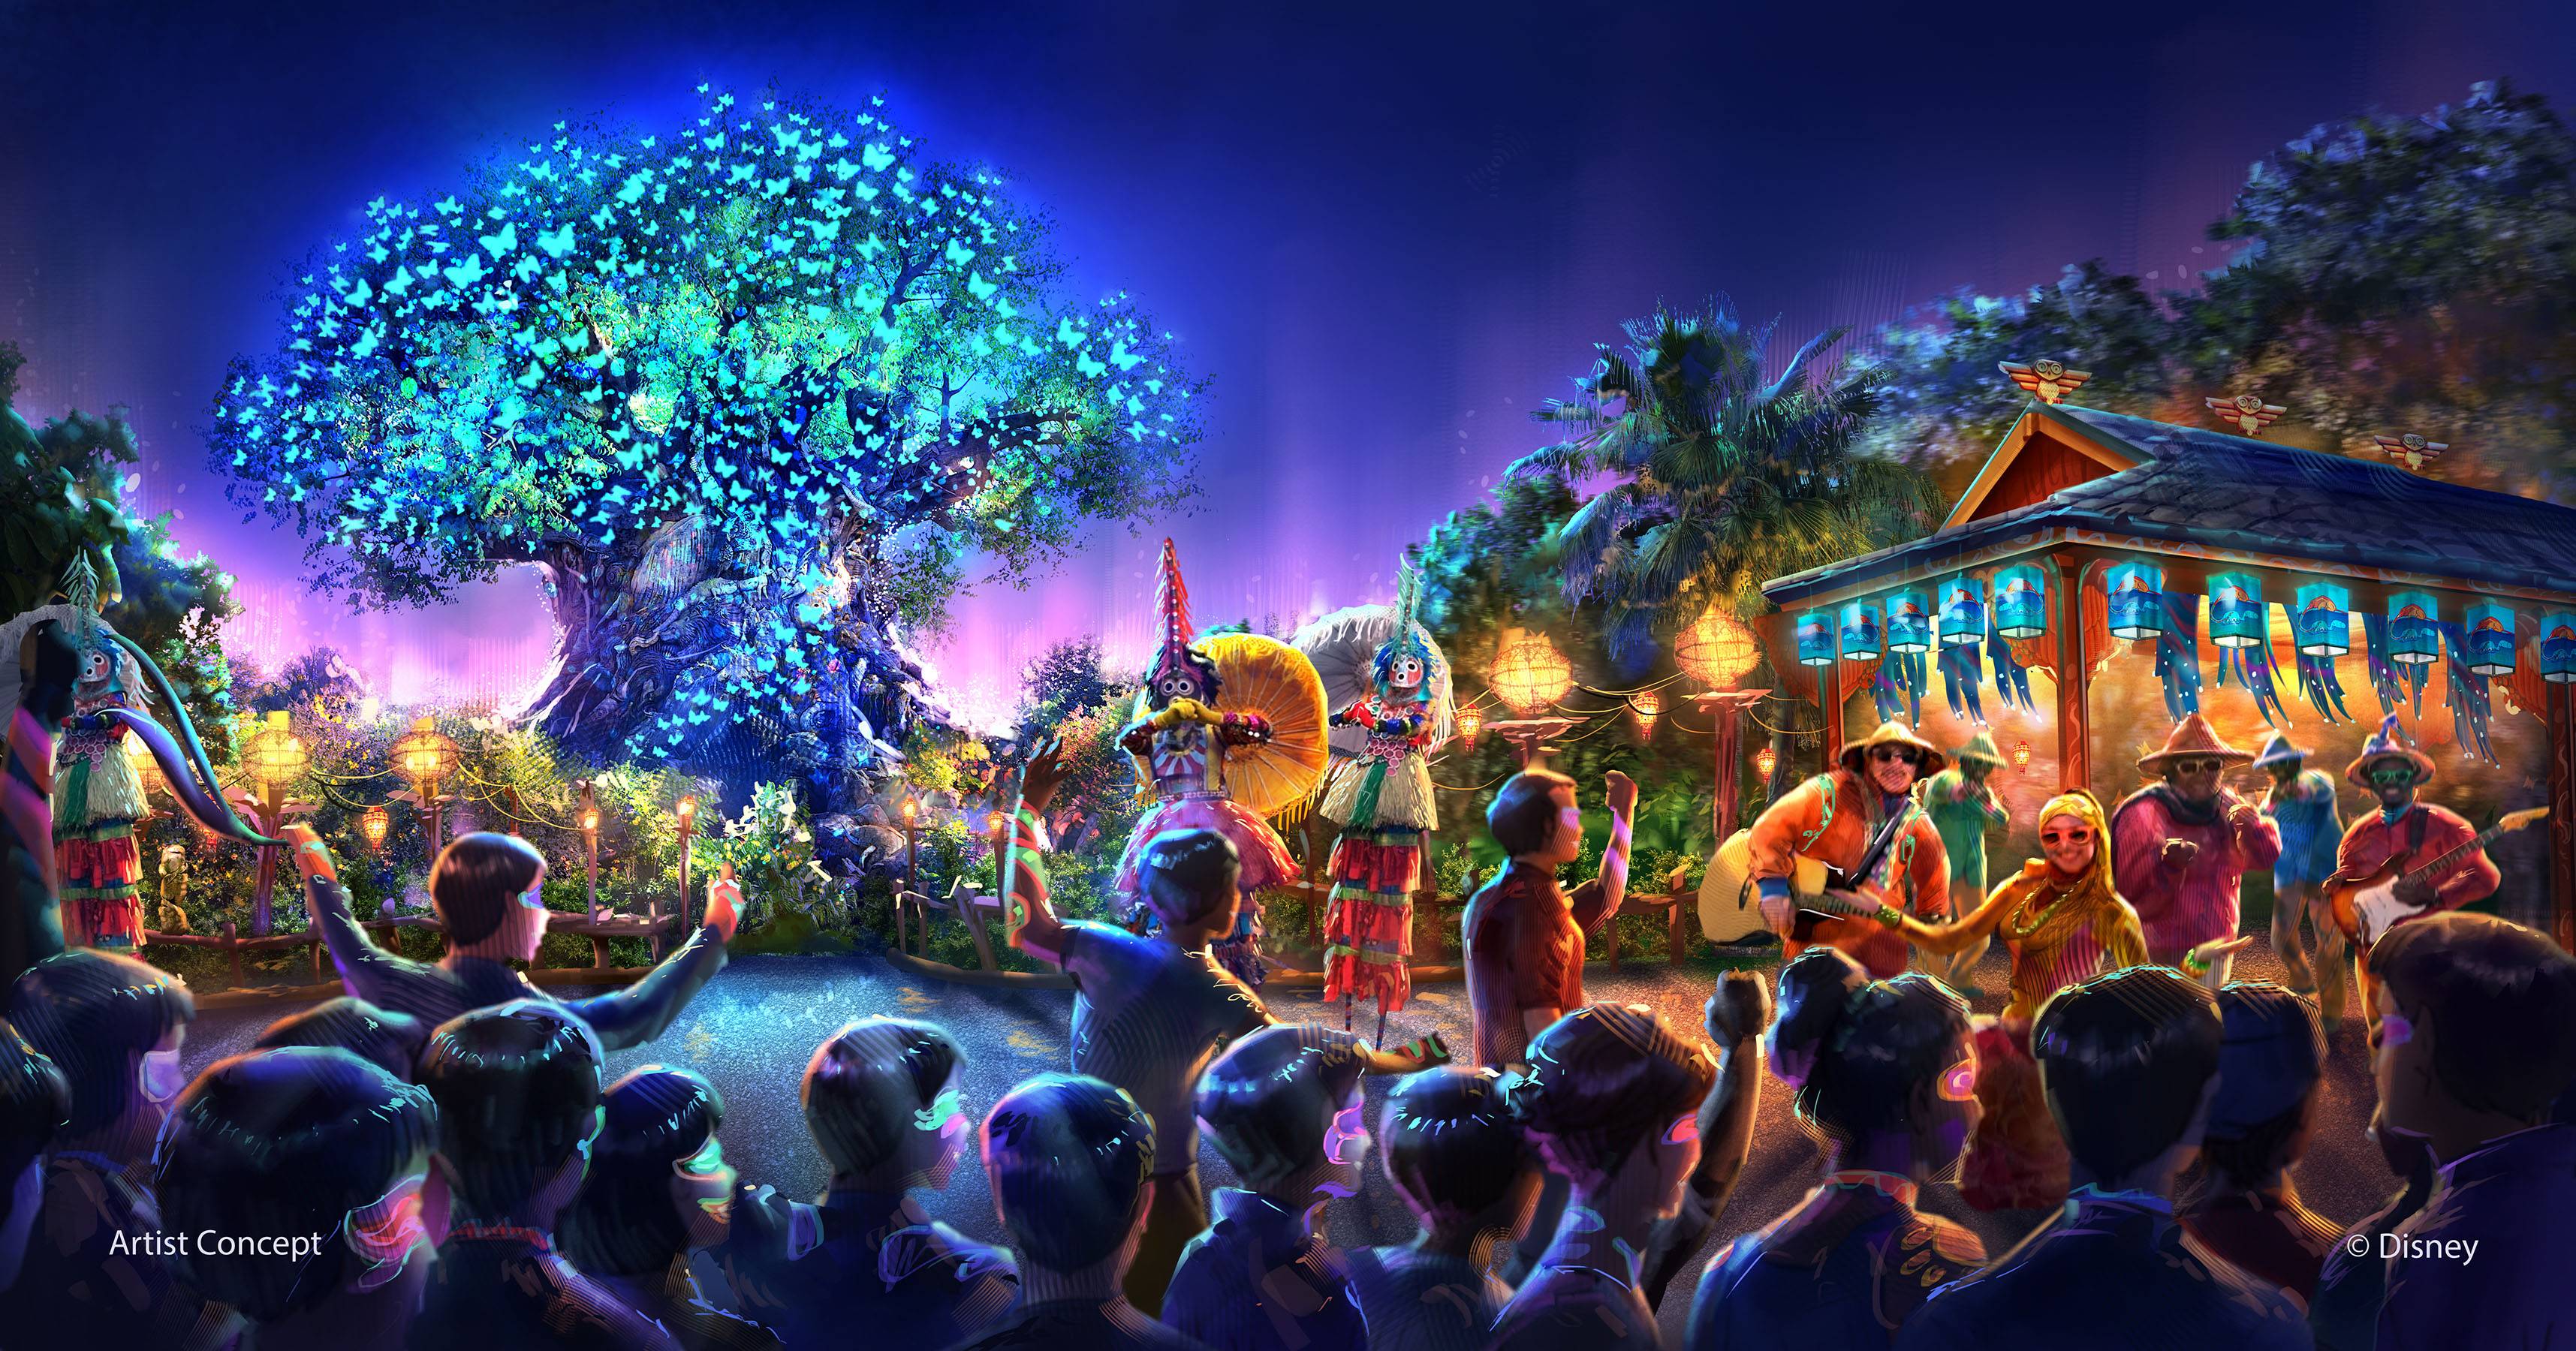 Concept art of Disney's Animal Kingdom nighttime entertainment